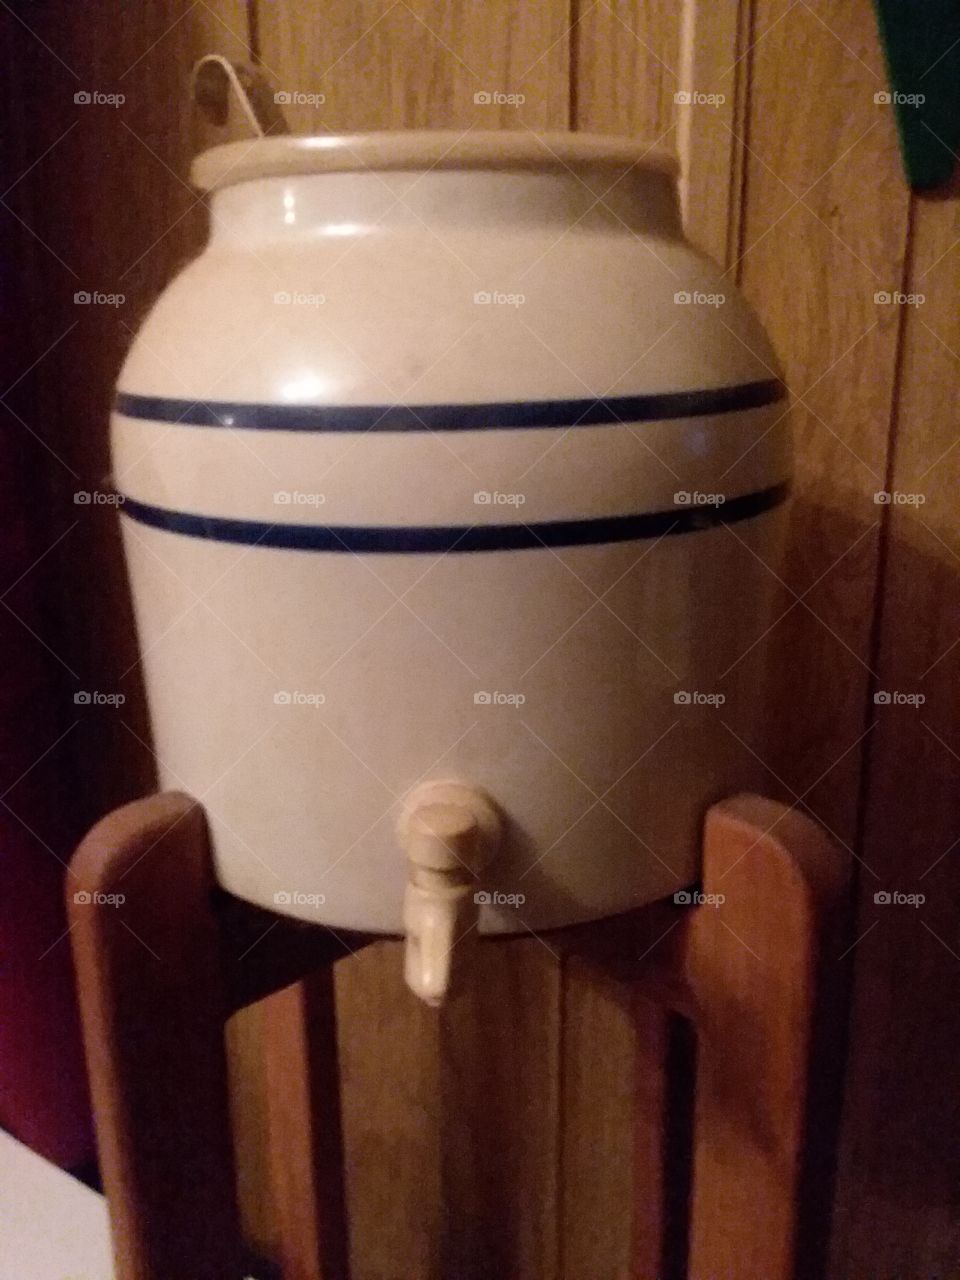 antique water dispenser